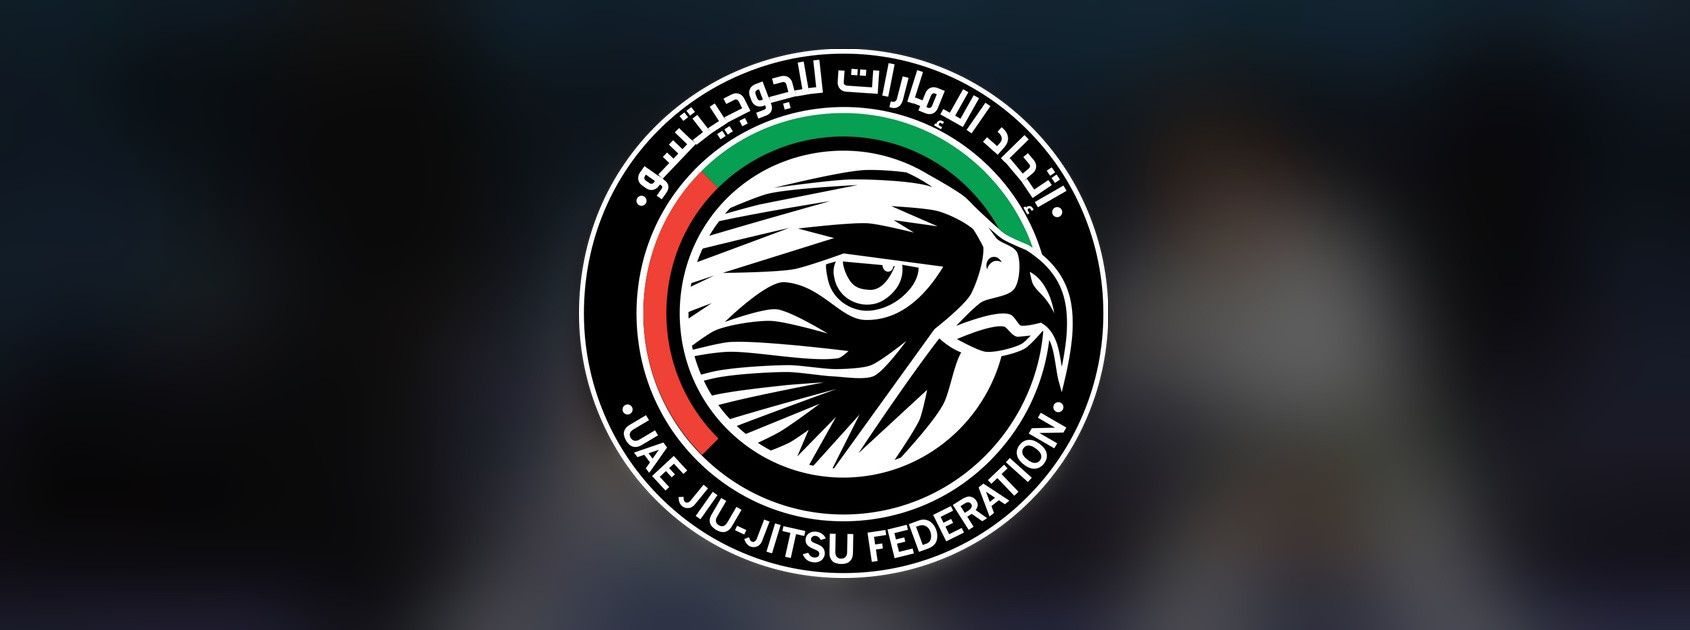 Abu Dhabi Extreme Championship, which combines jiu-jitsu and grappling, set to launch